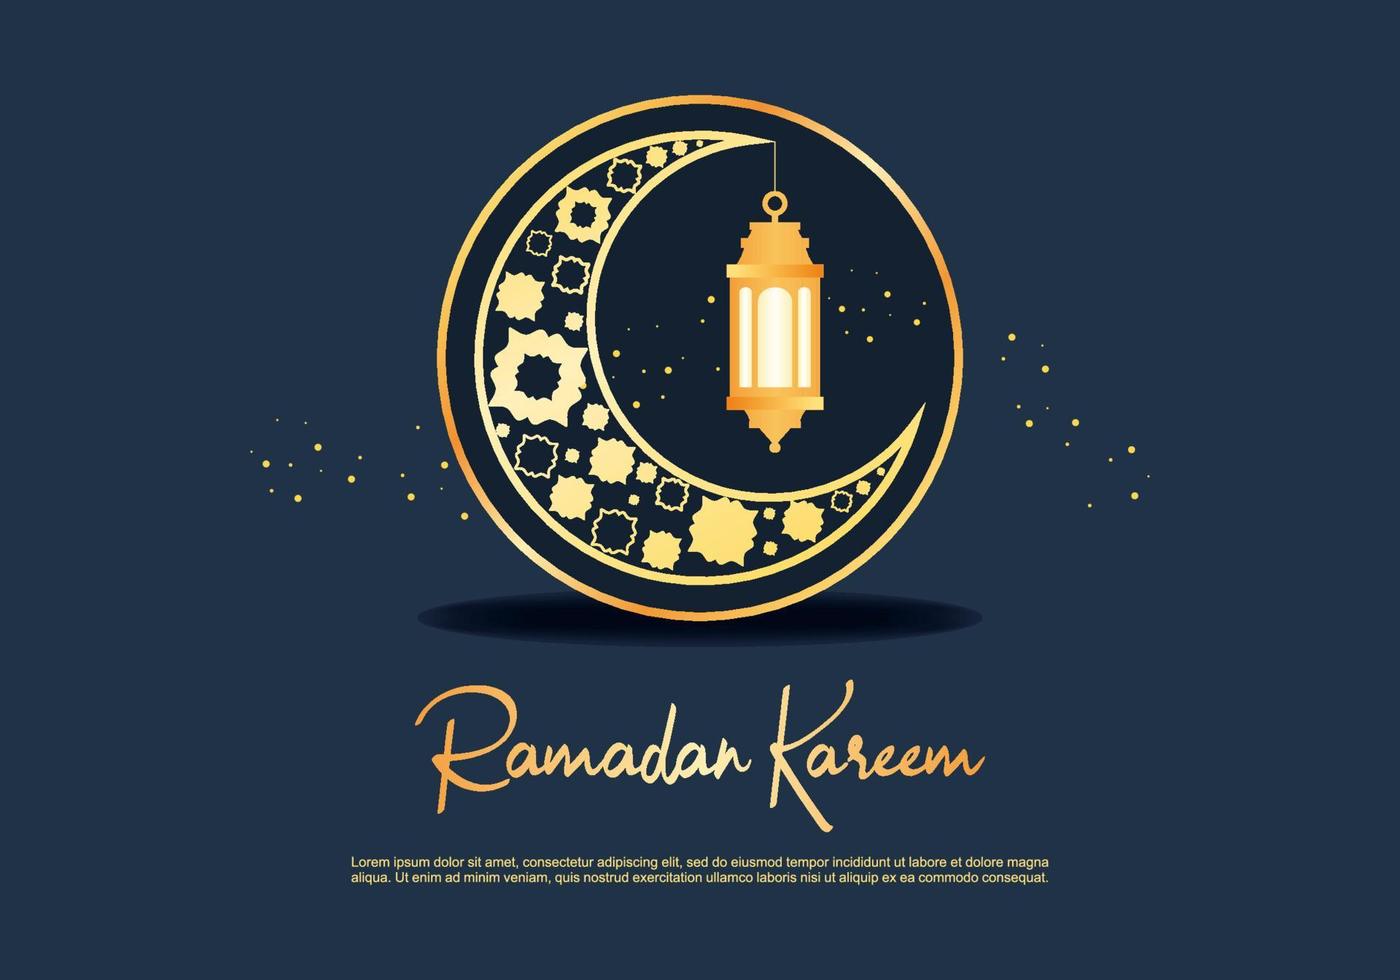 Ramadan kareem greeting card with islamic ornaments in moon, lantern vector